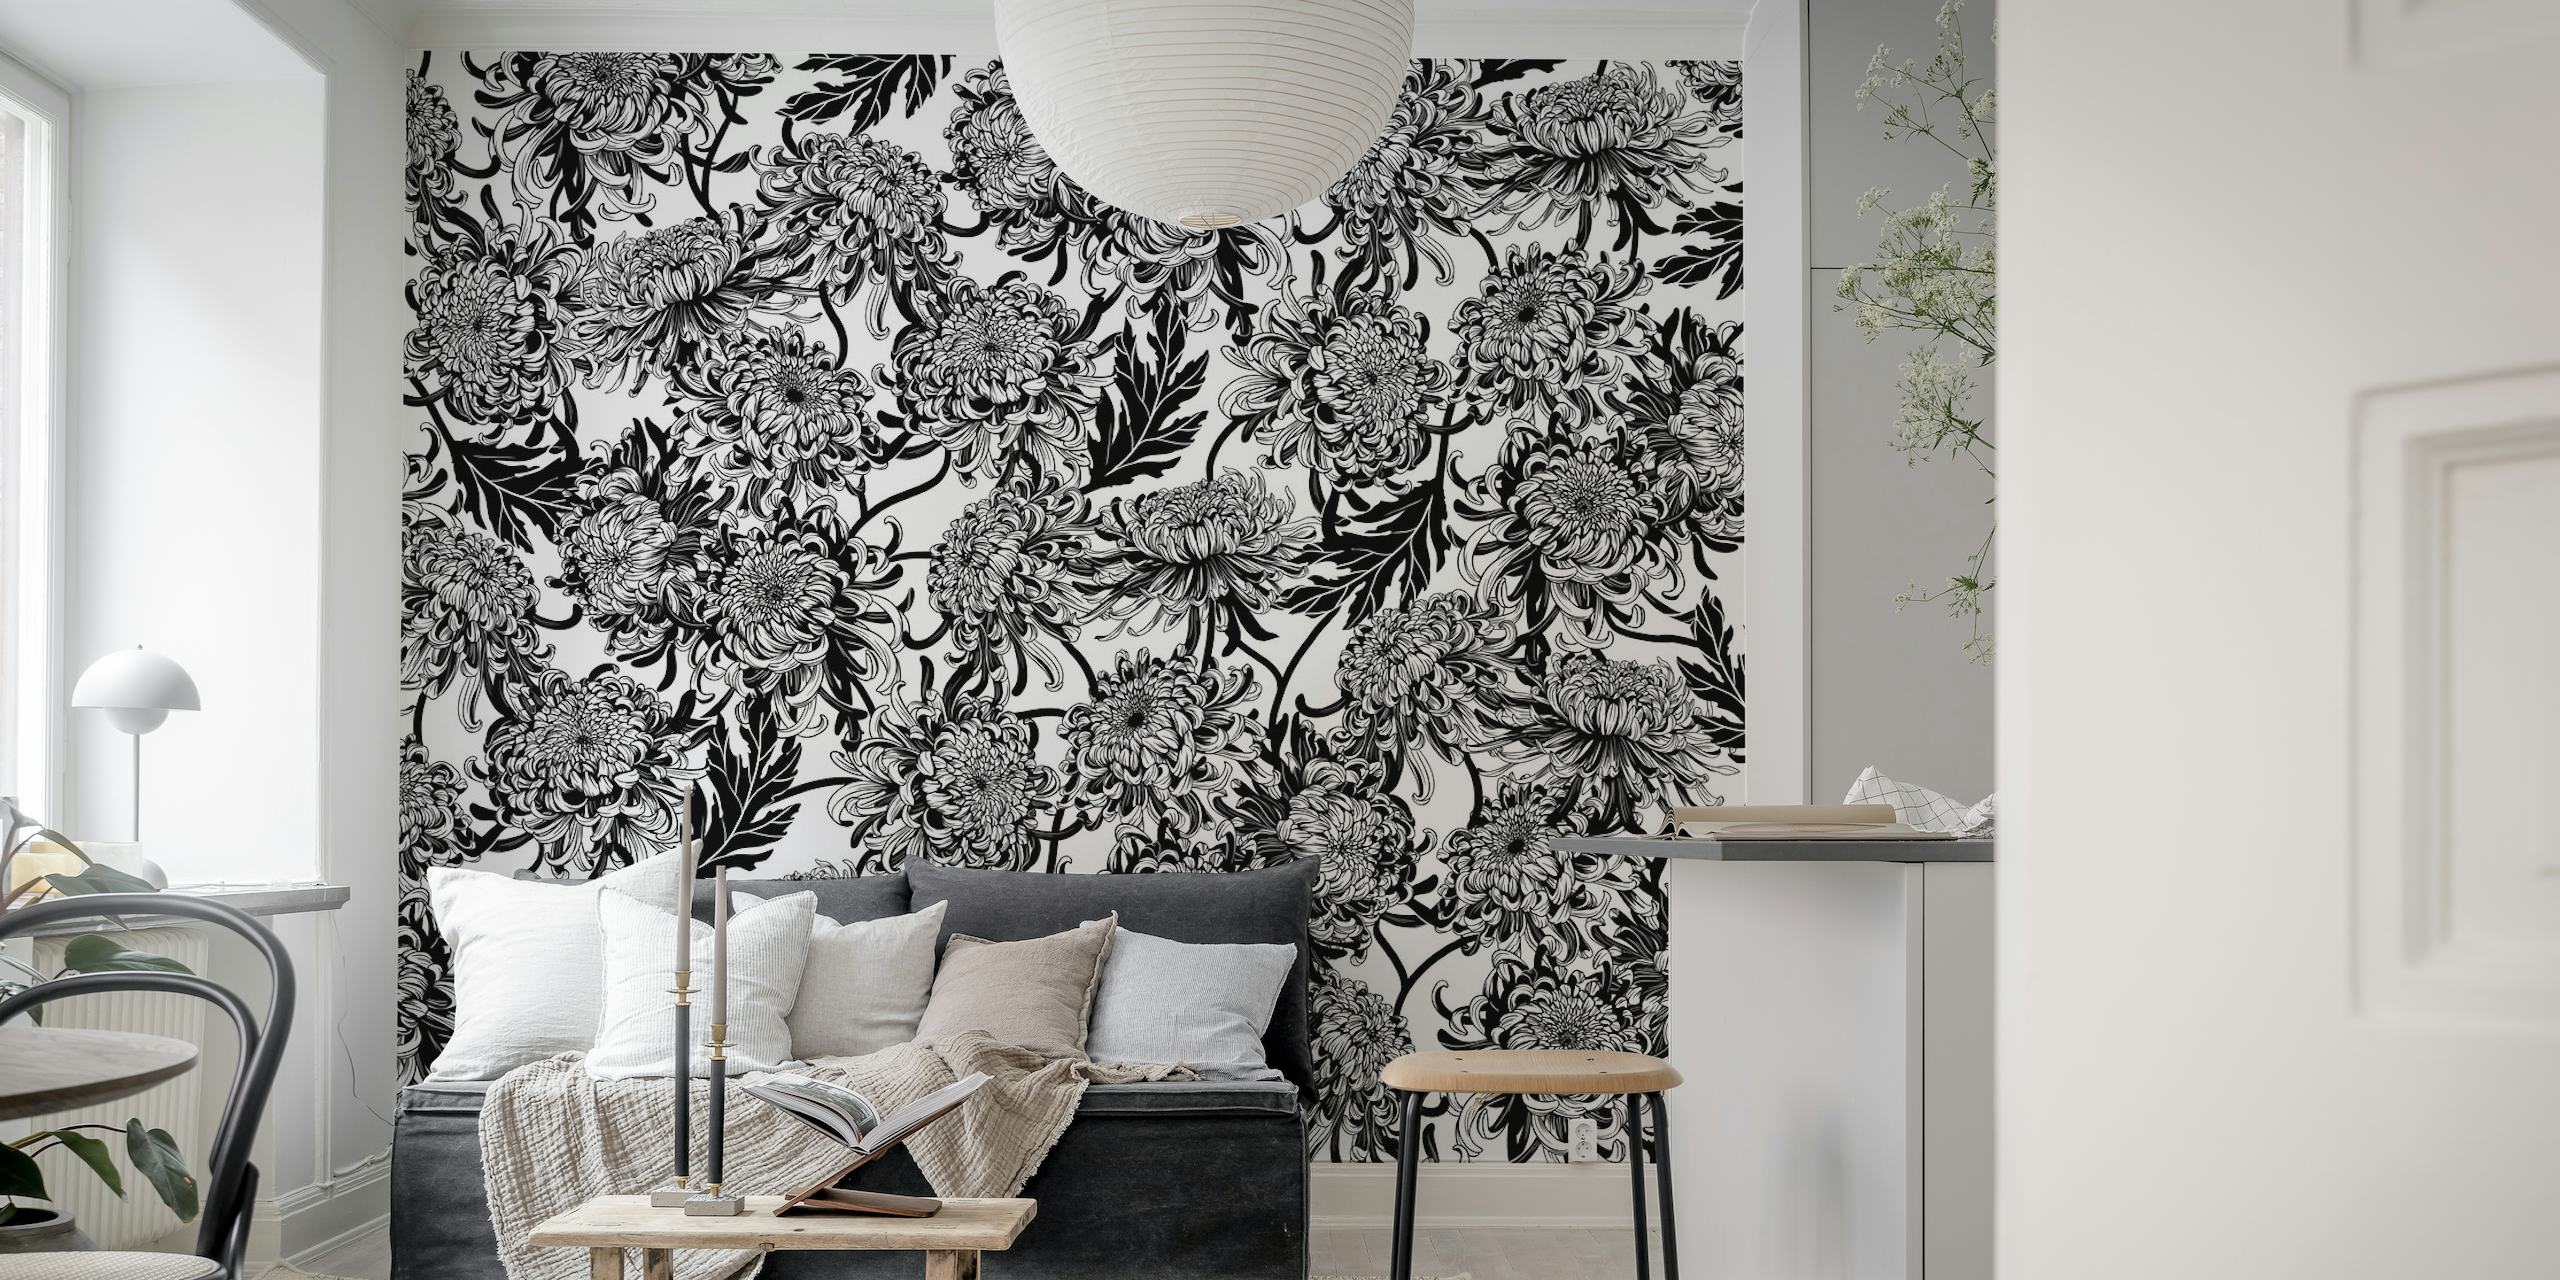 Chrysanthemica wallpaper